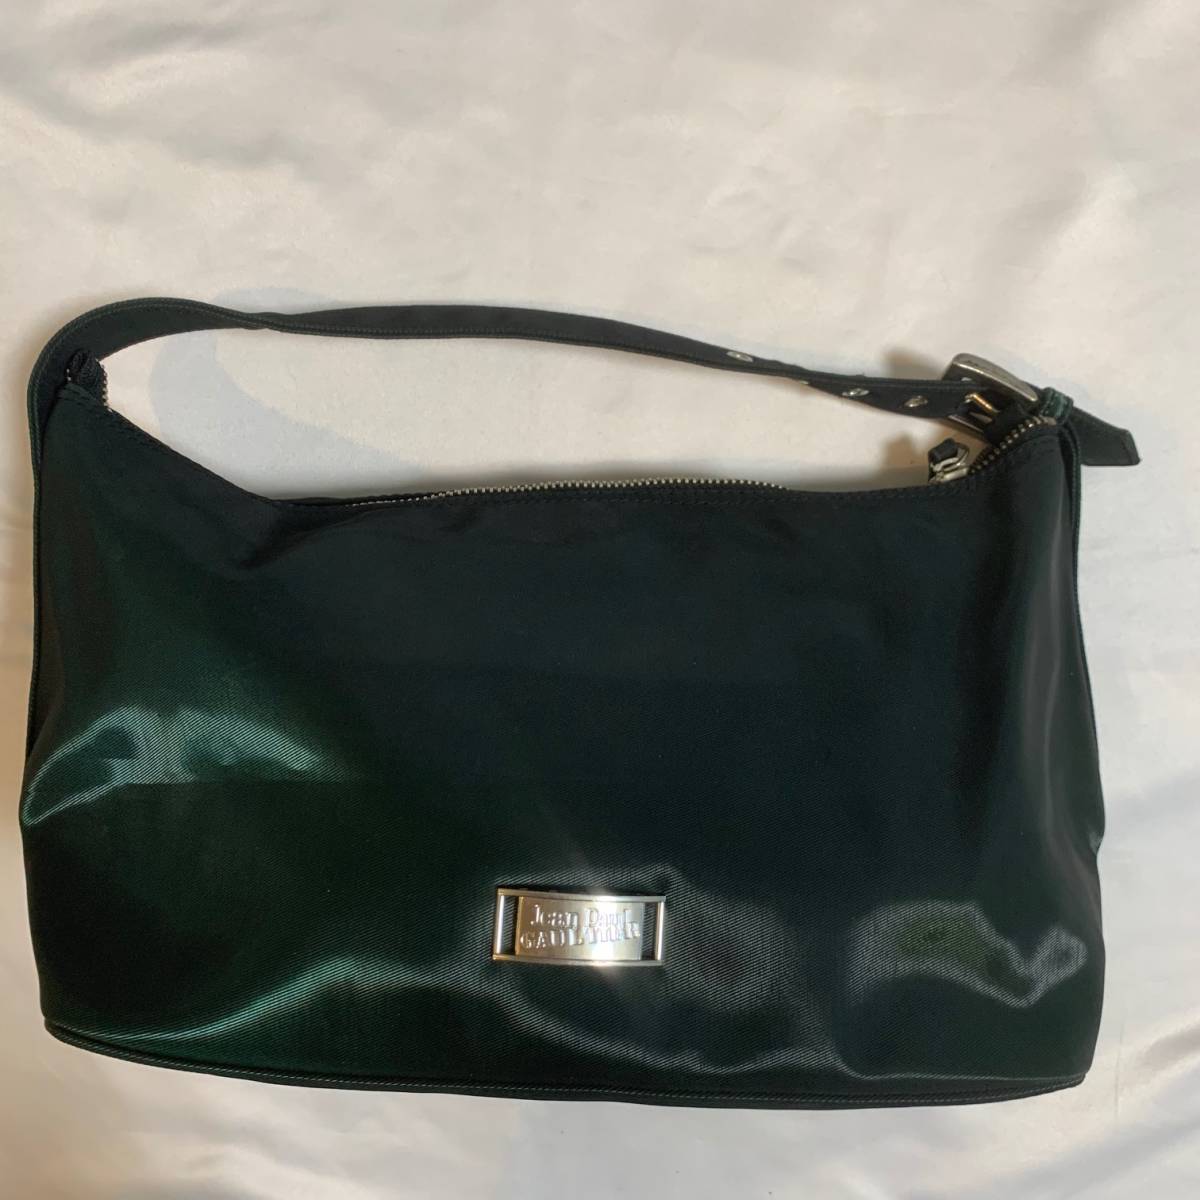 Jean Paul GAULTIER Jean-Paul Gaultier Gaultier lustre bag bag bag bag deep green dark green archive archive bag